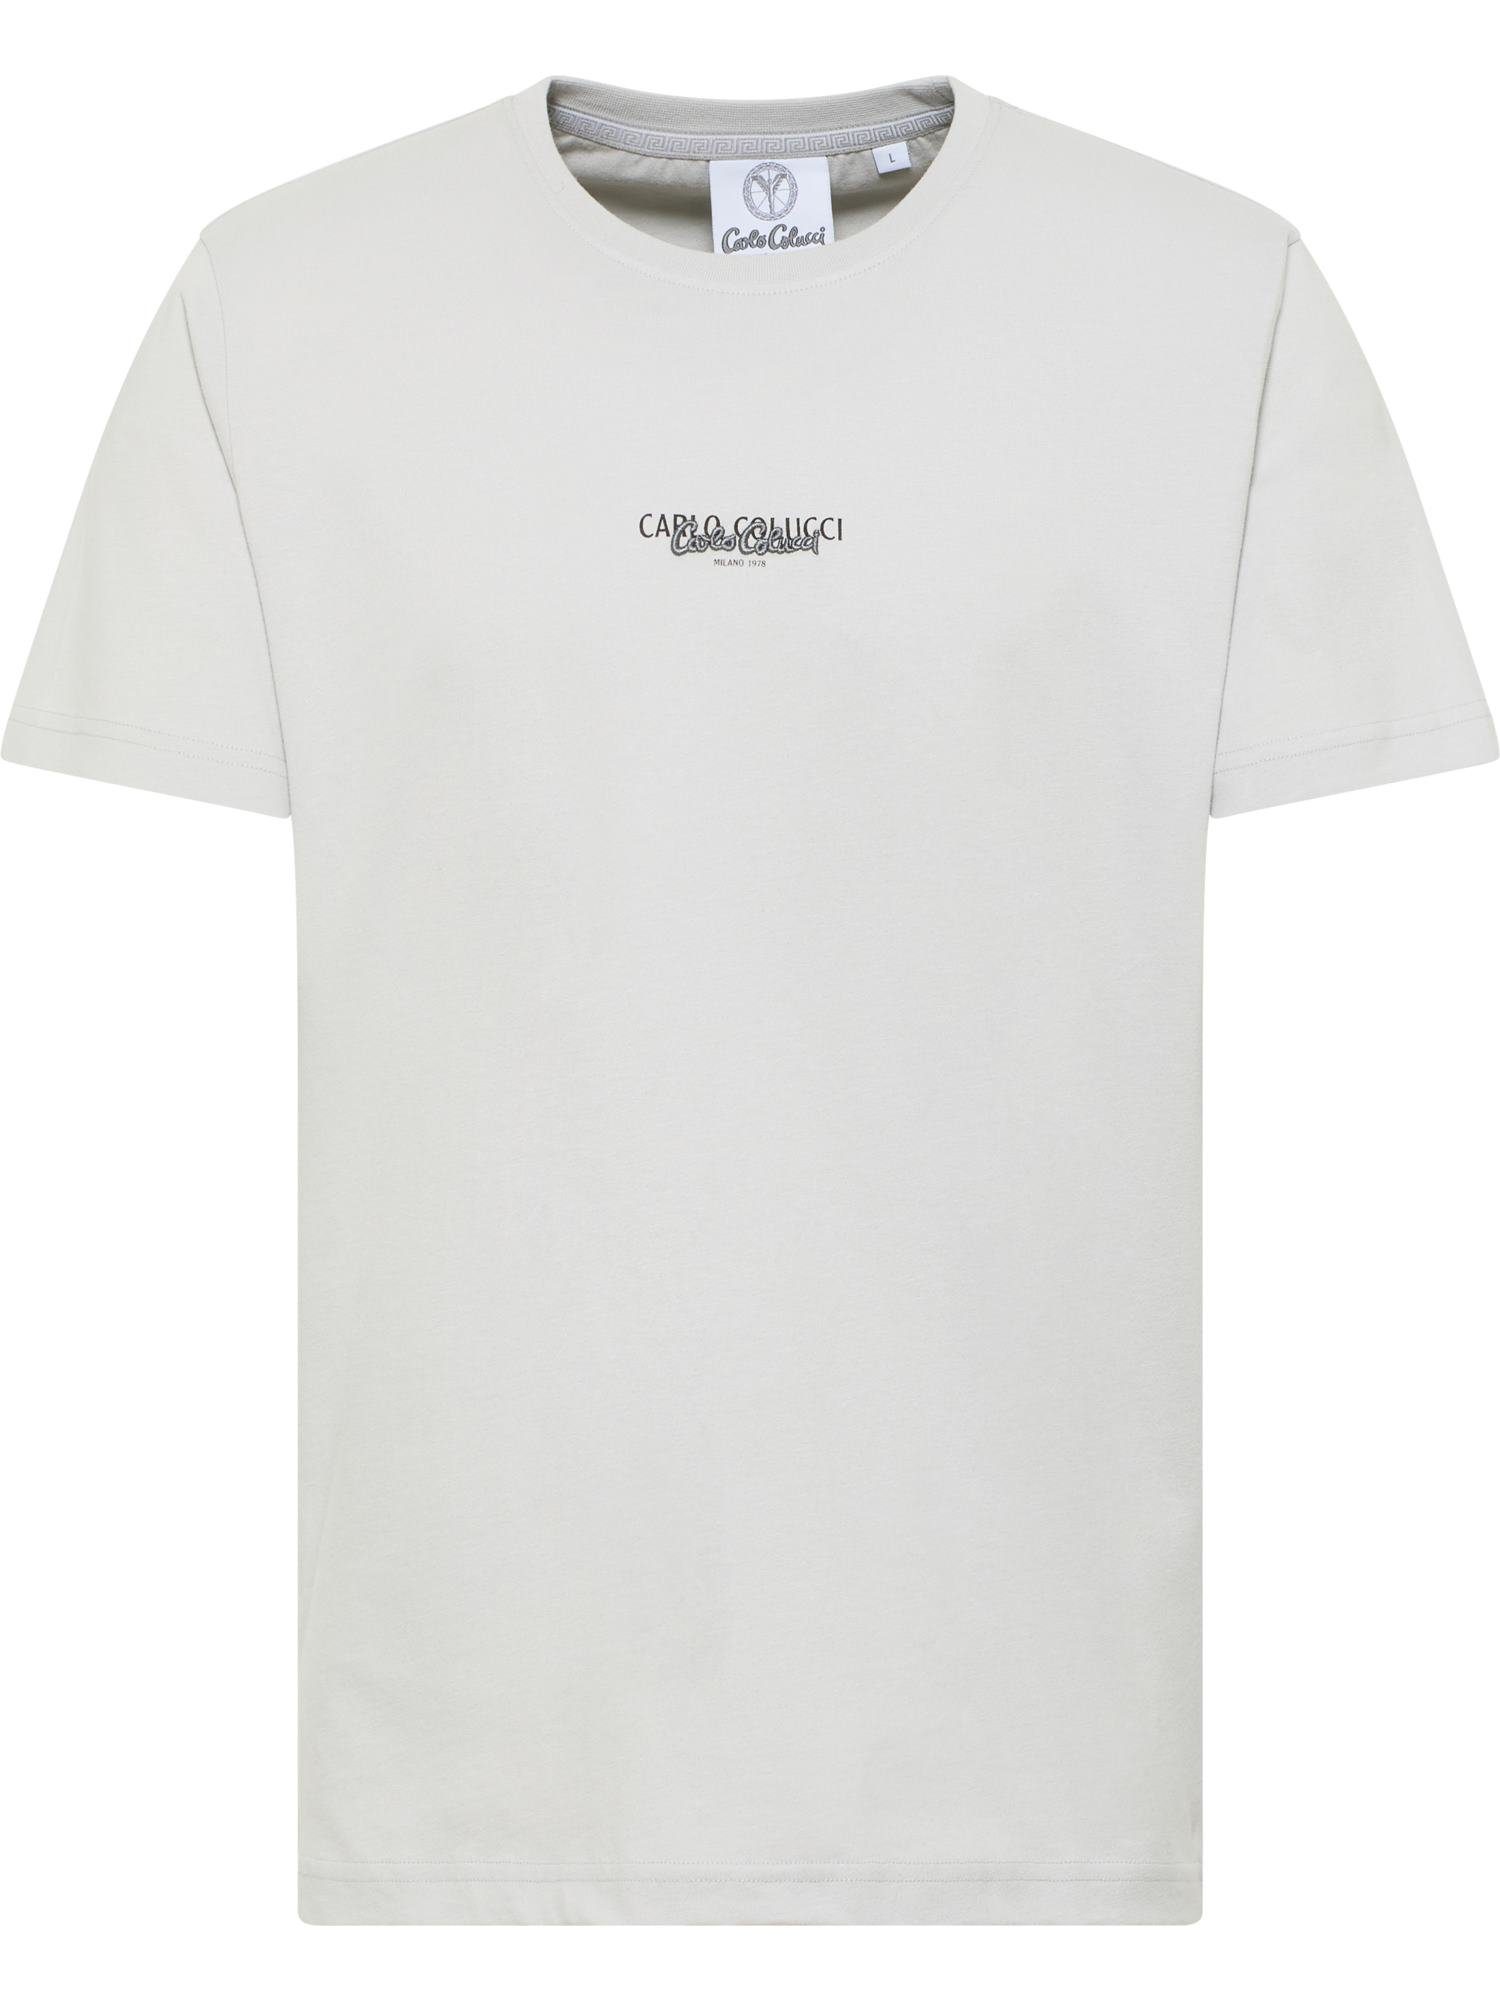 CARLO COLUCCI T-Shirt Grau De Salvador